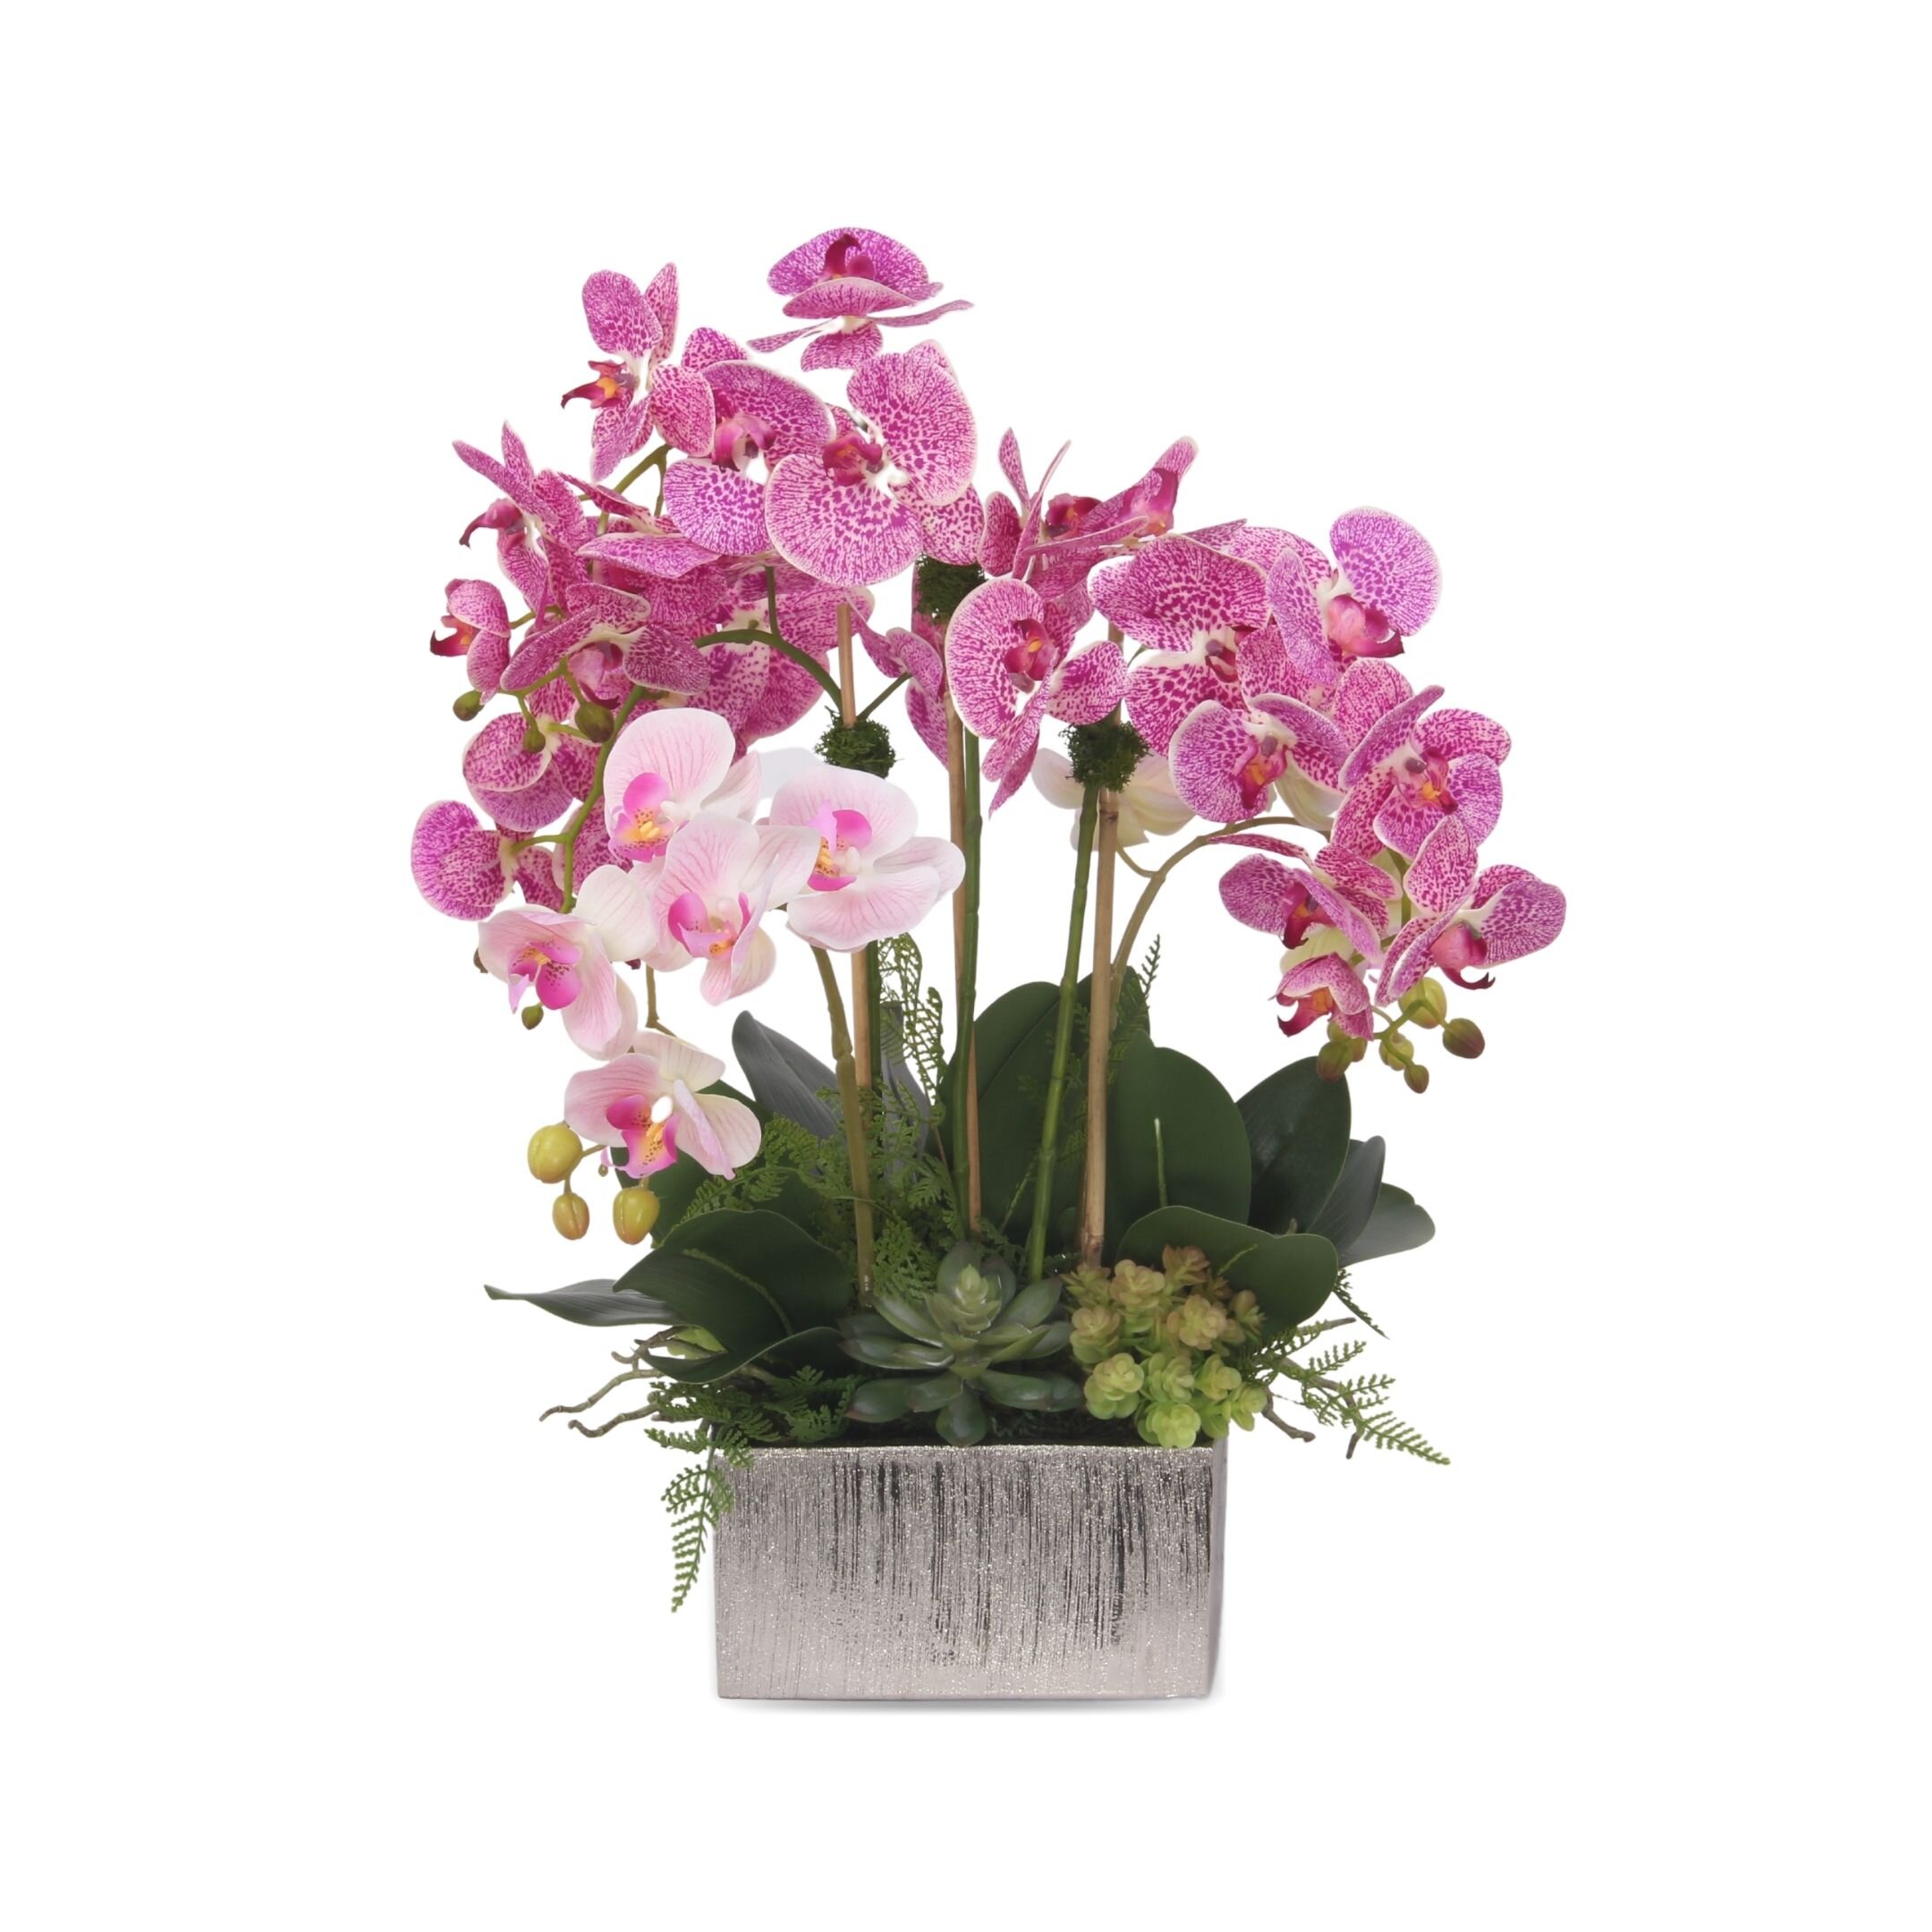 Silk Flowers - Artificial Flower Arrangements & Plants at Jenny Silks